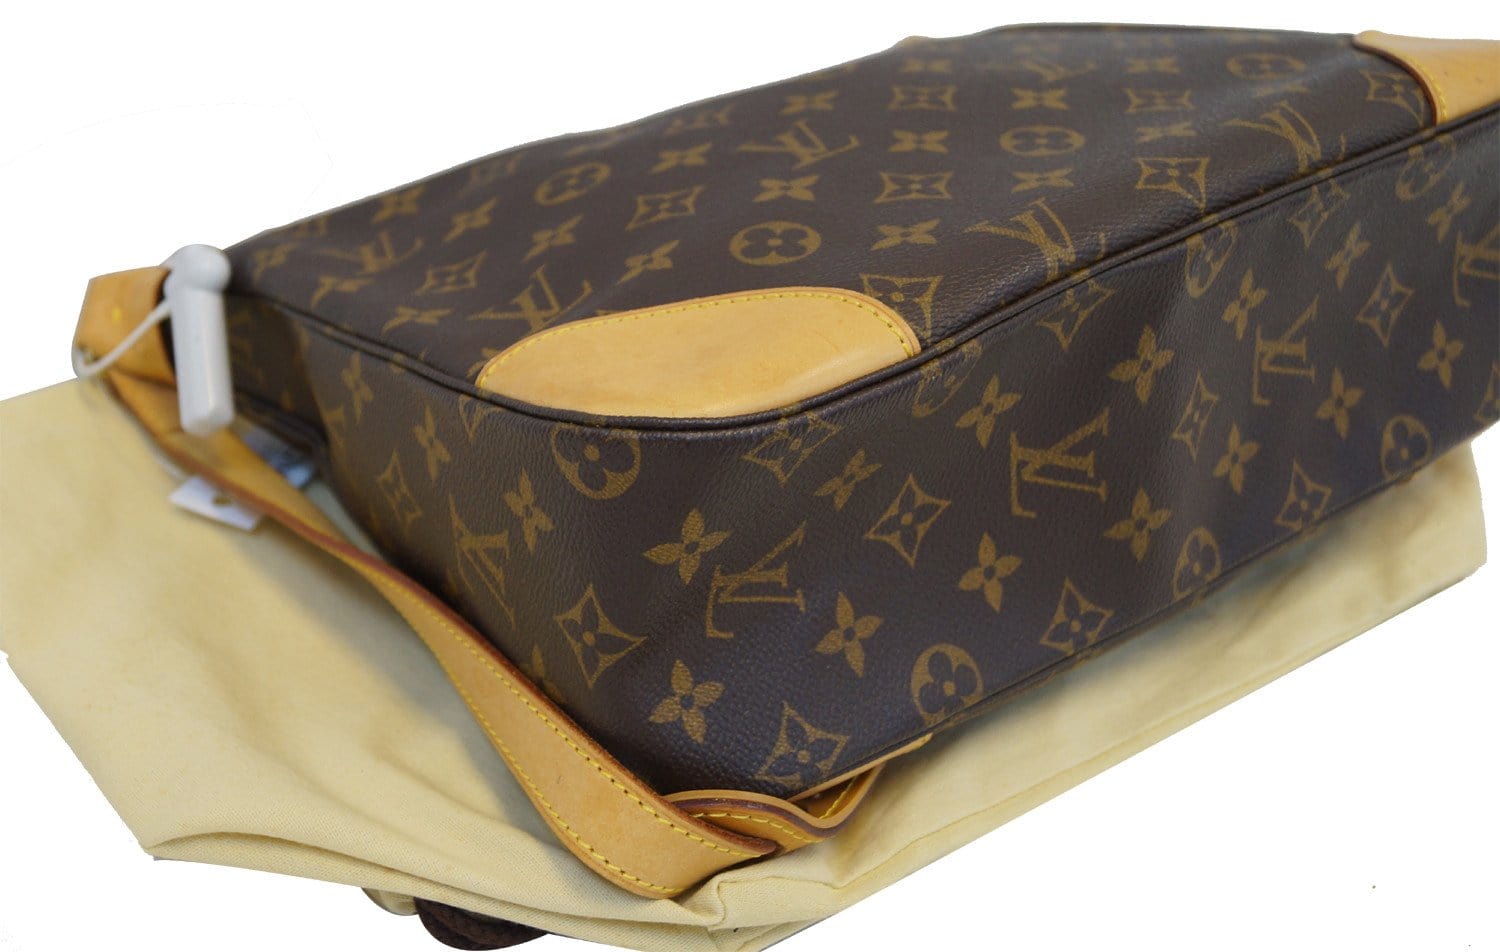 Boulogne NM Monogram – Keeks Designer Handbags